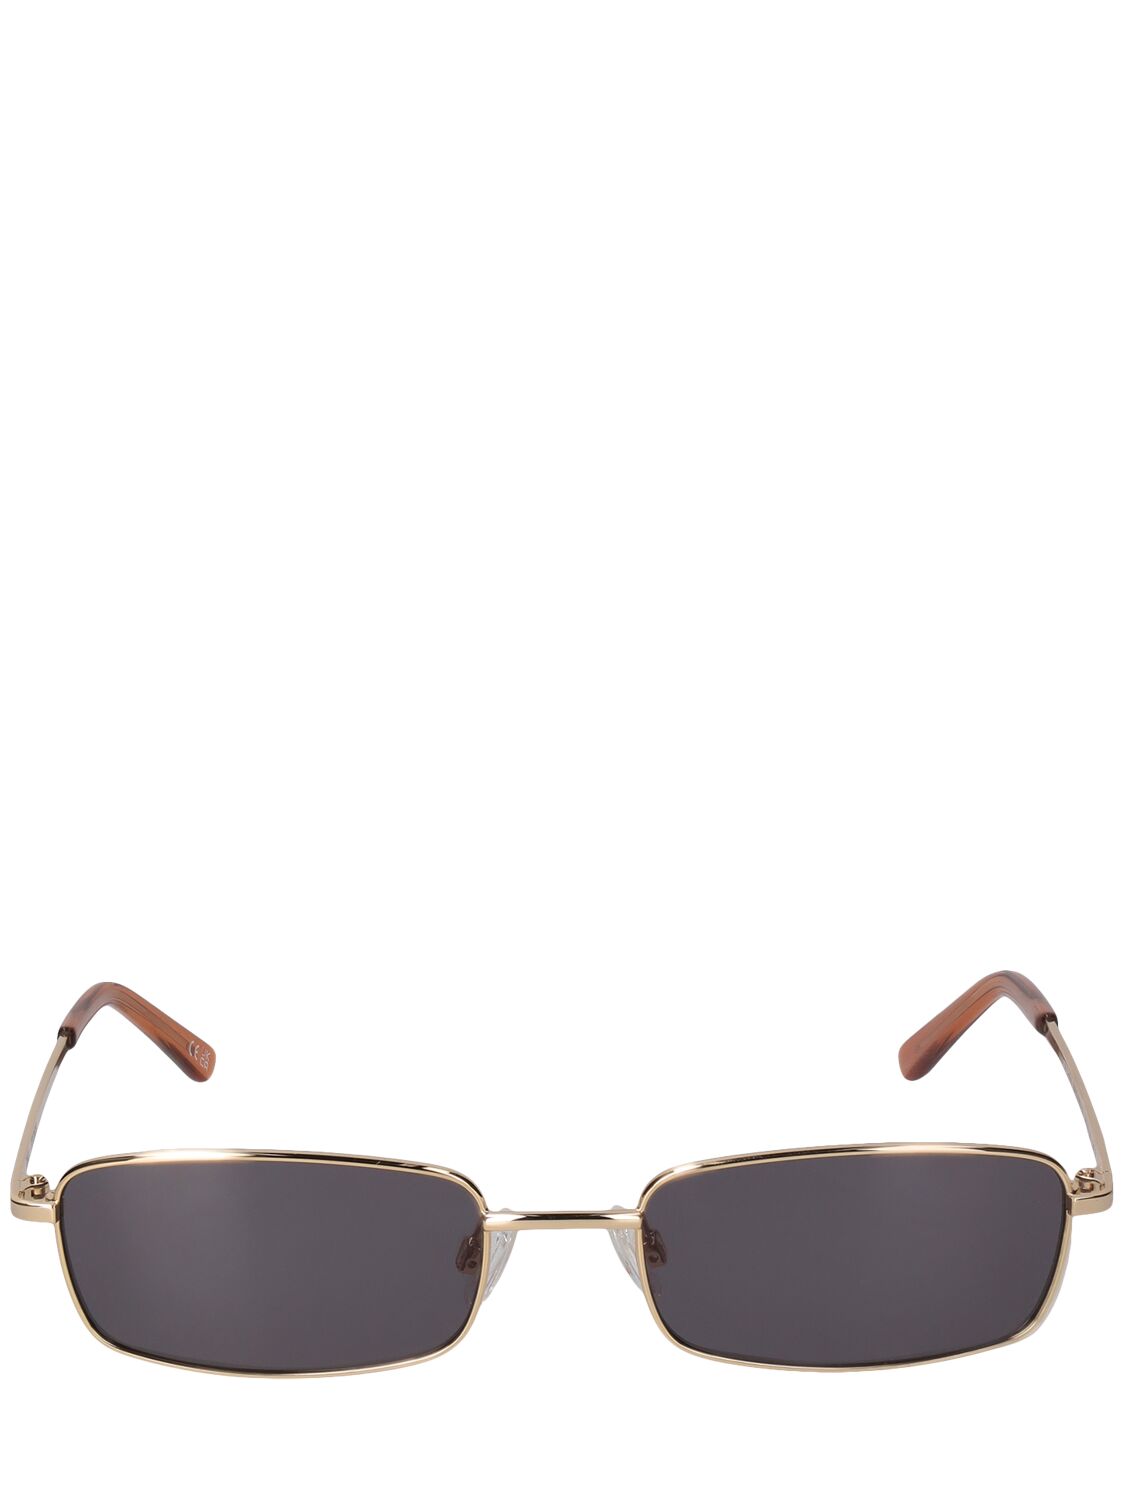 Image of Olsen Squared Metal Sunglasses